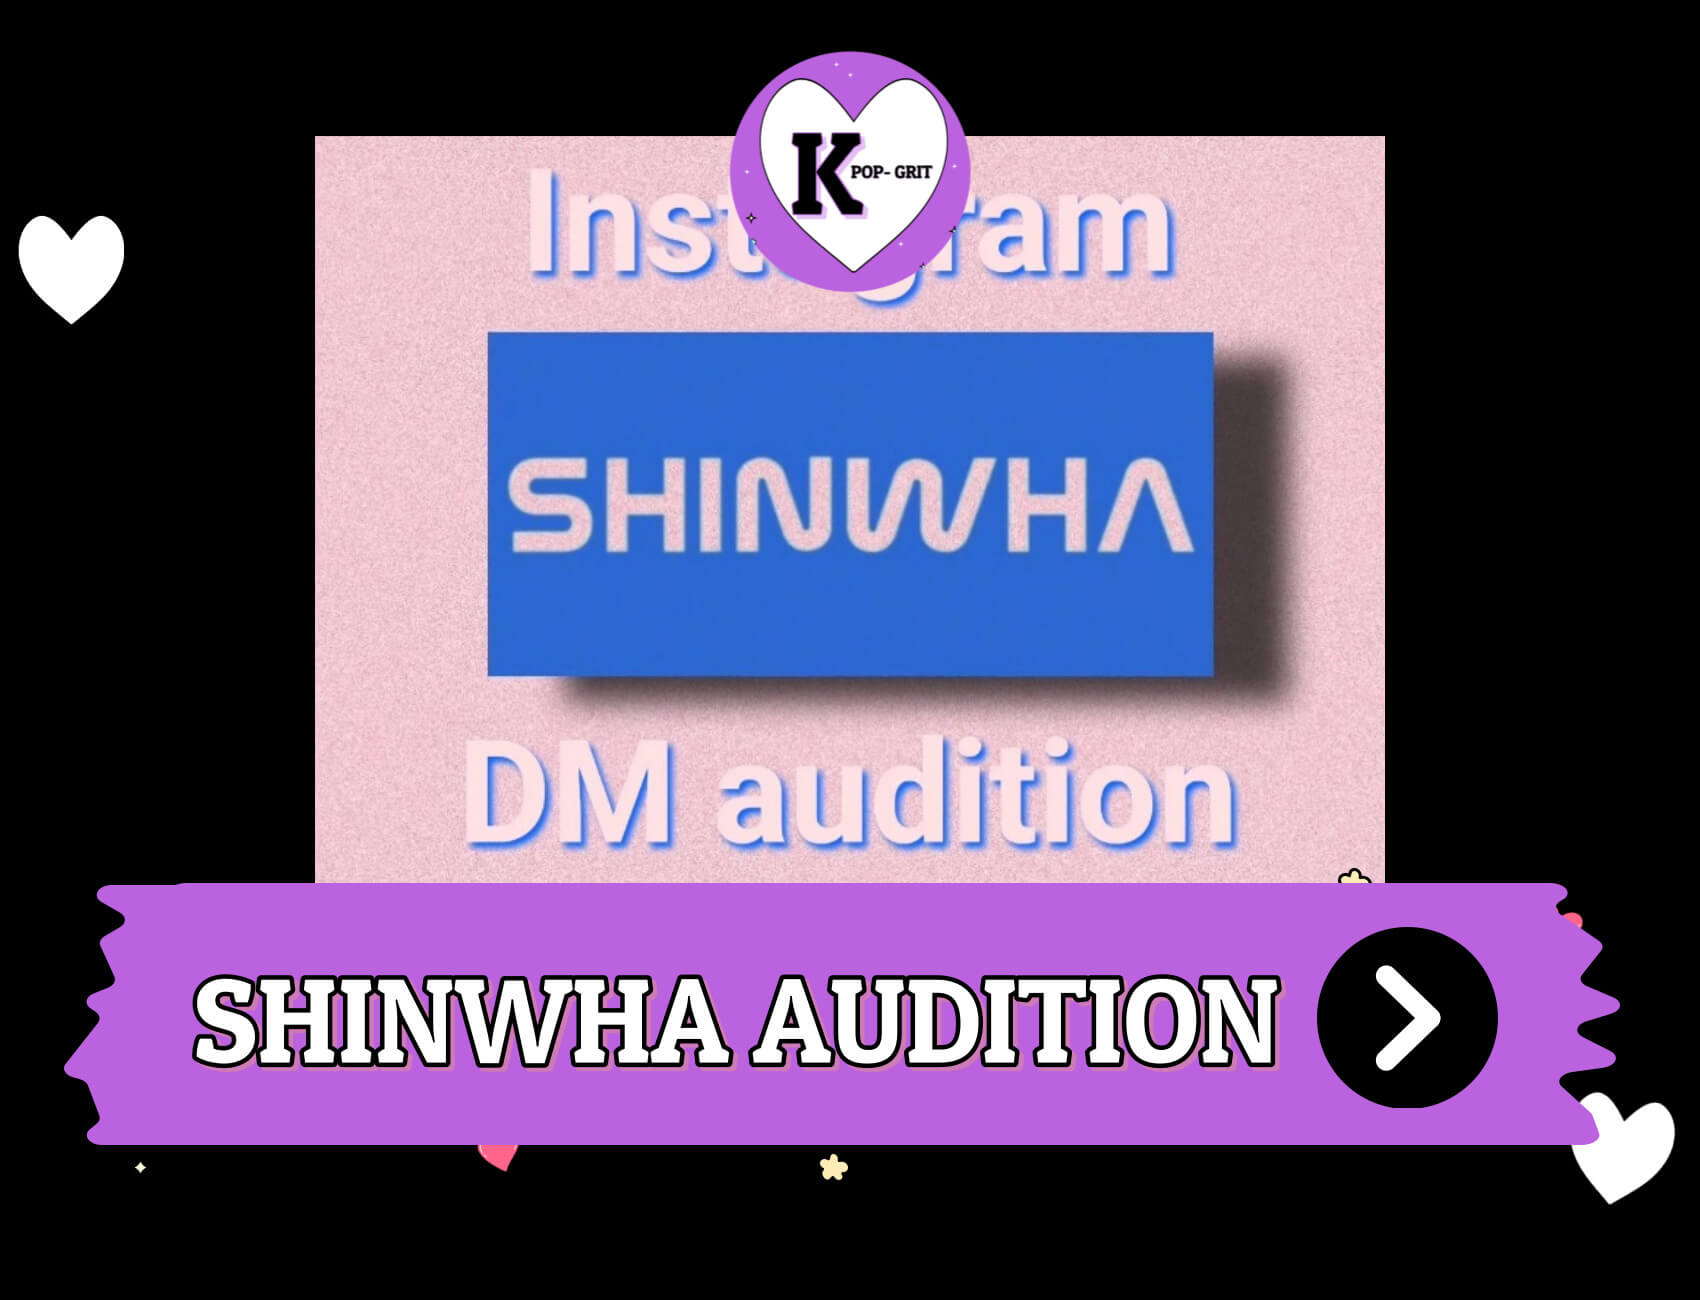 SHINWHA Audition